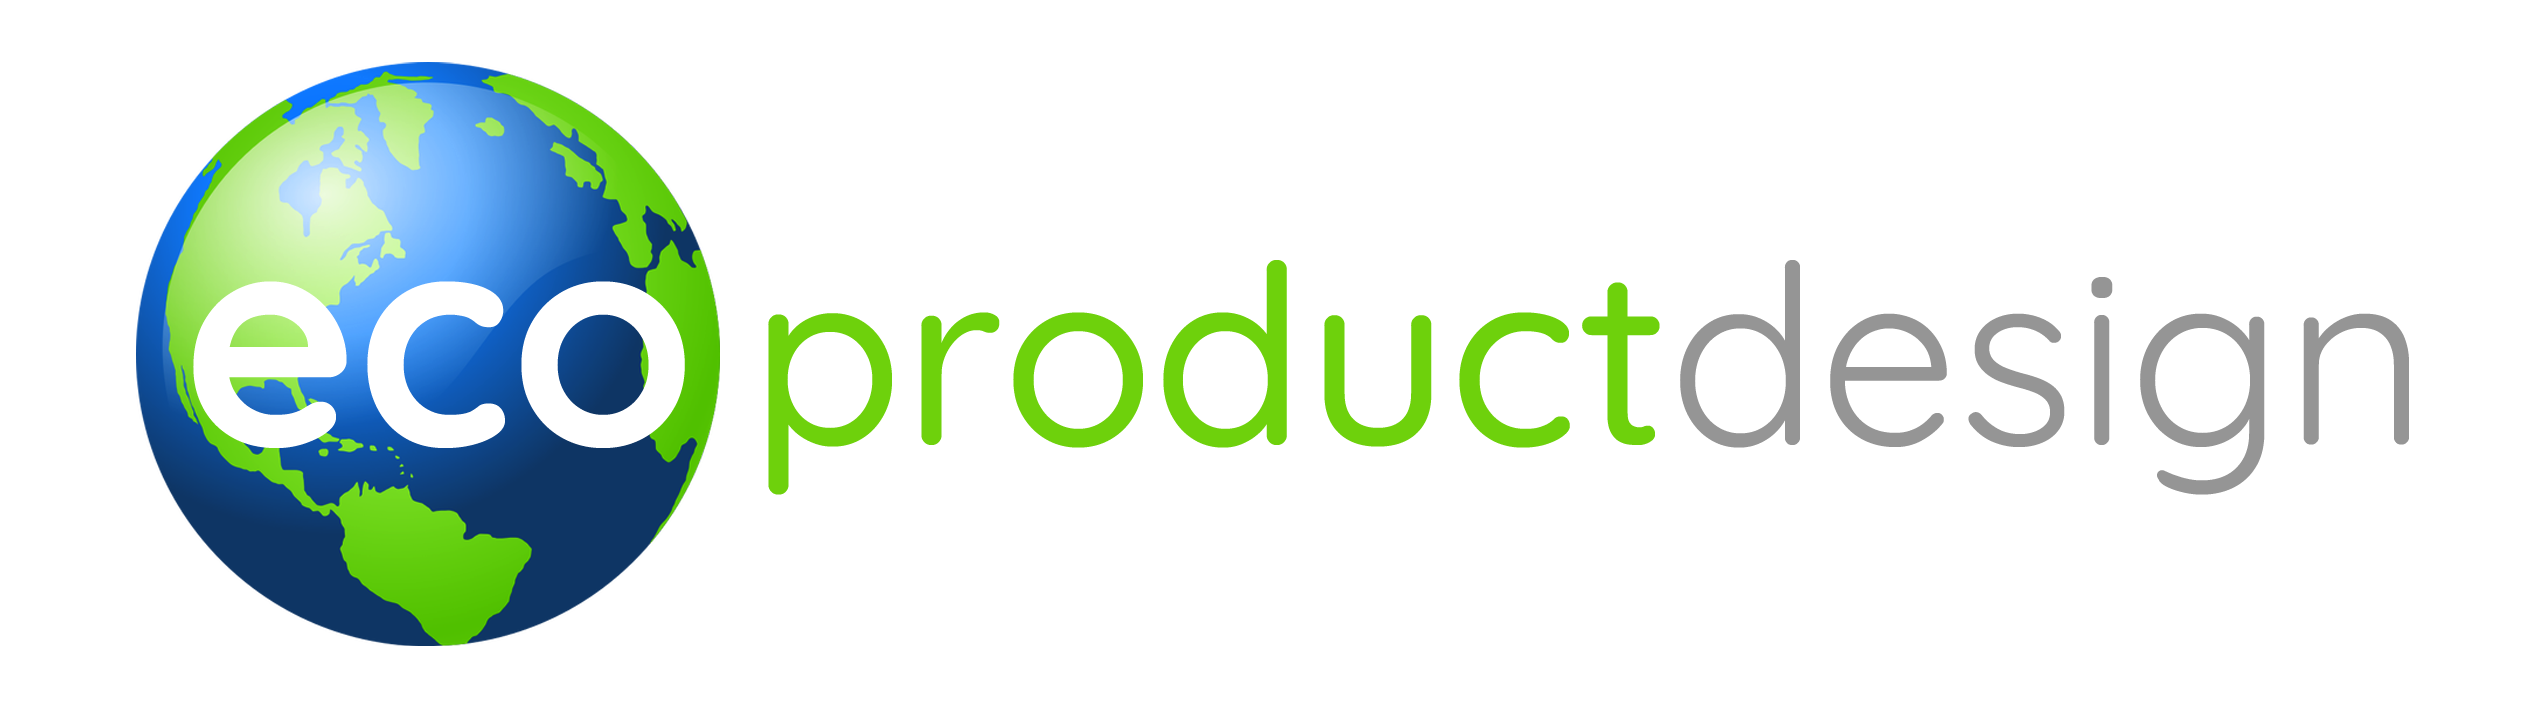 Eco production design logo